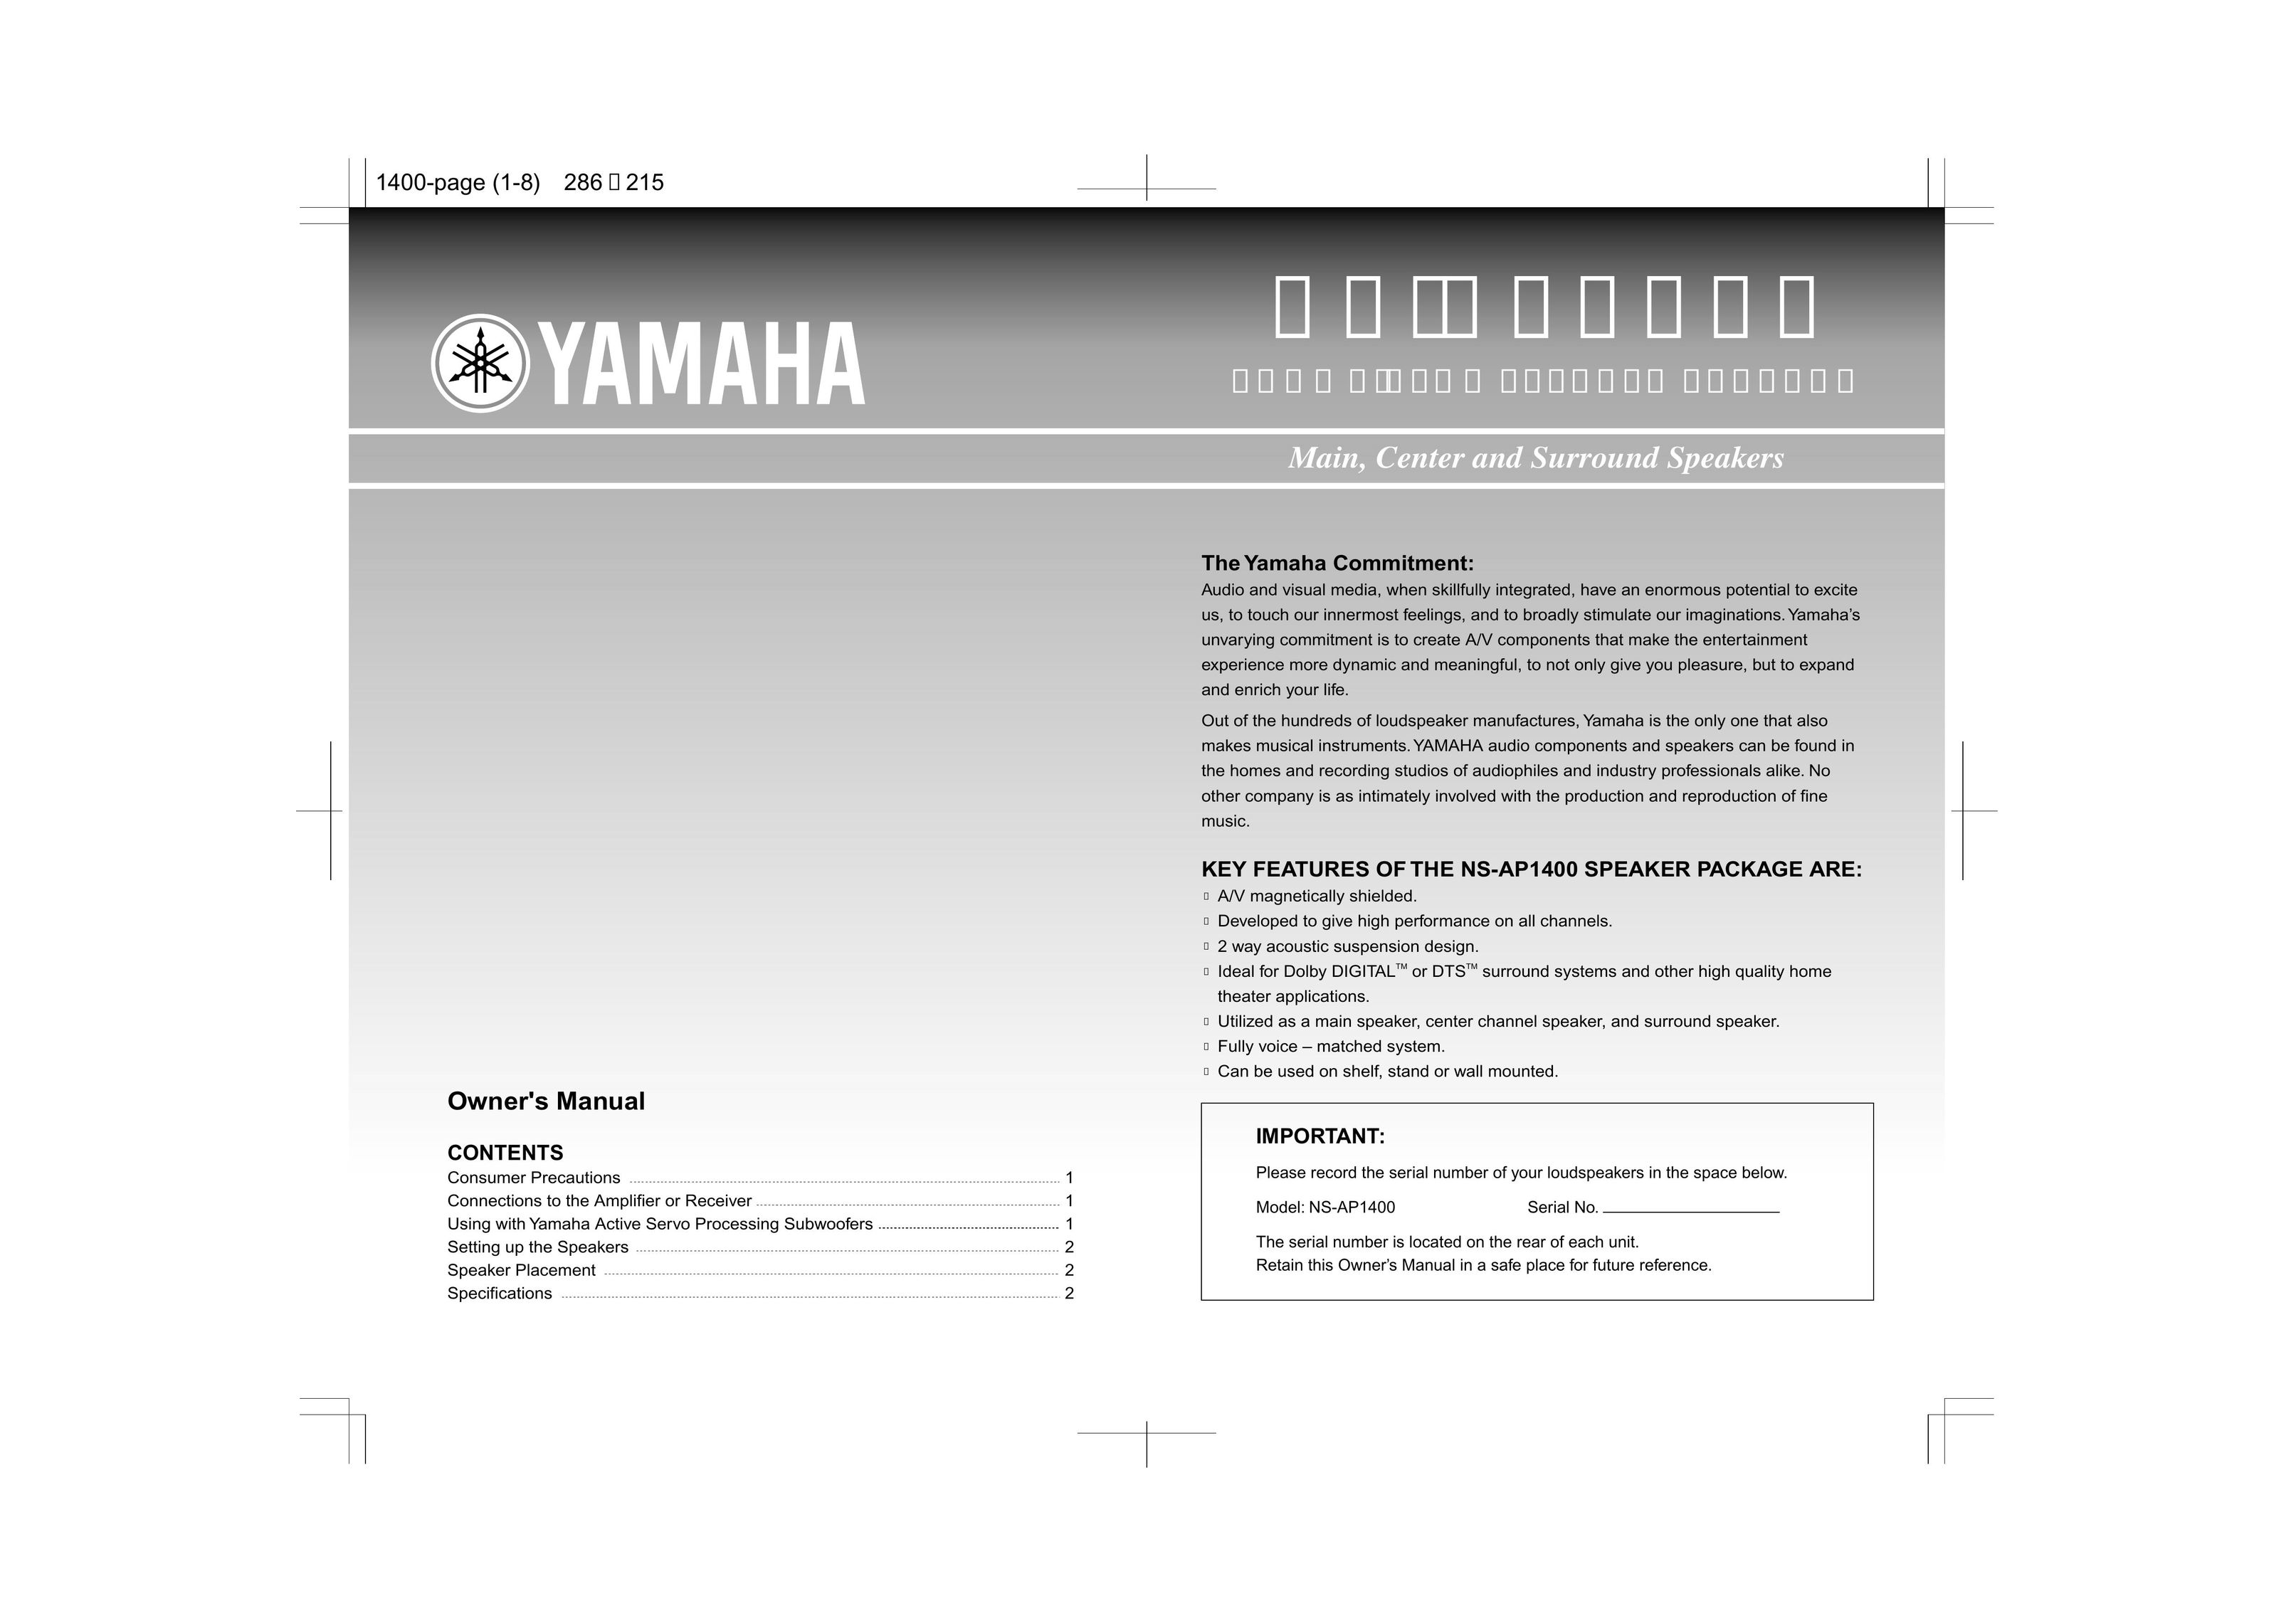 Yamaha NS-AP1400 Home Theater System User Manual